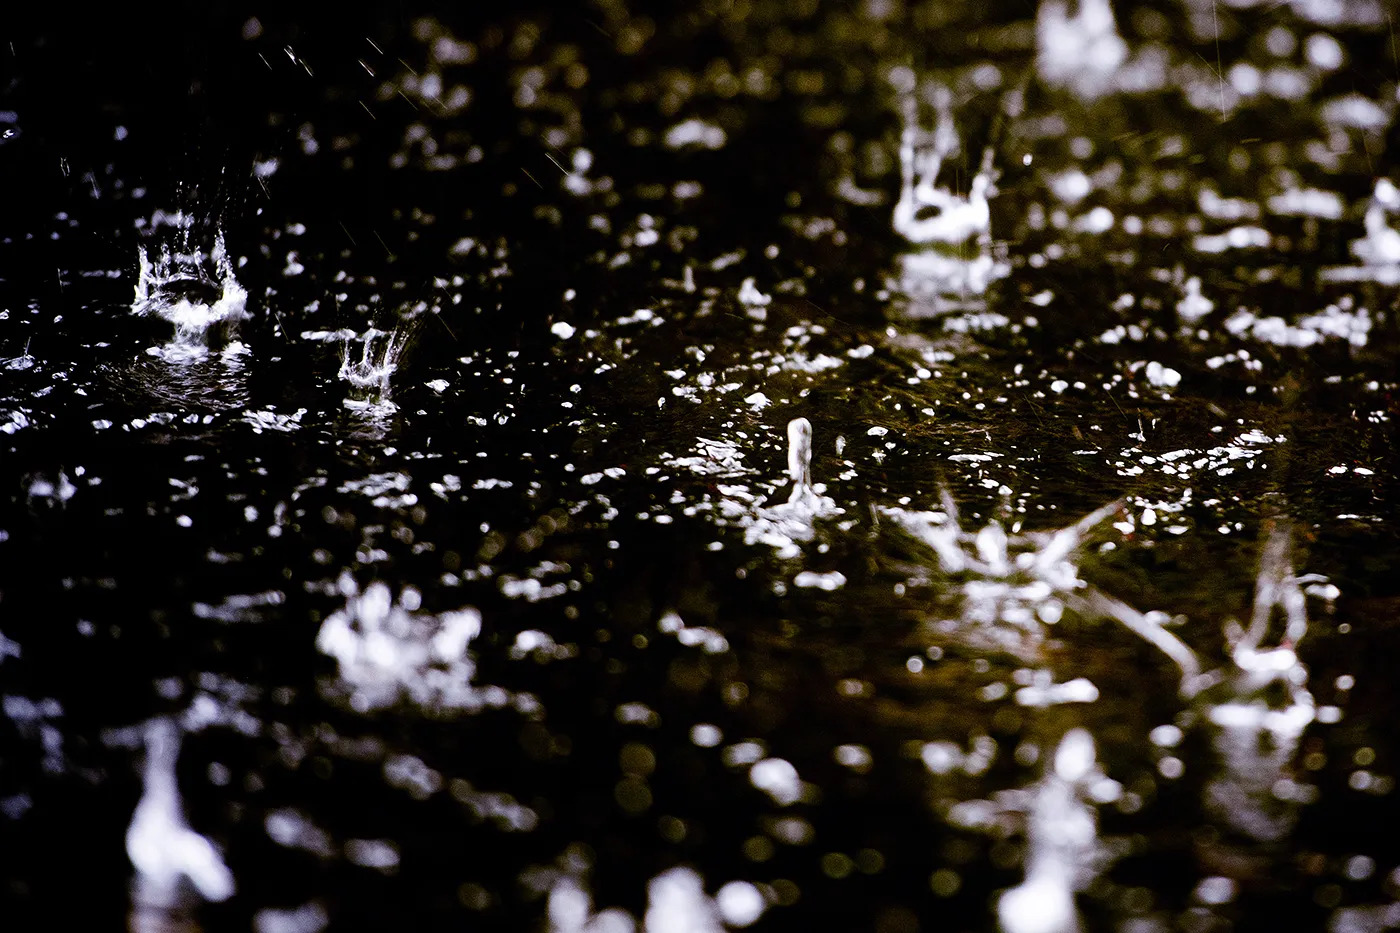 Splashing raindrops on water